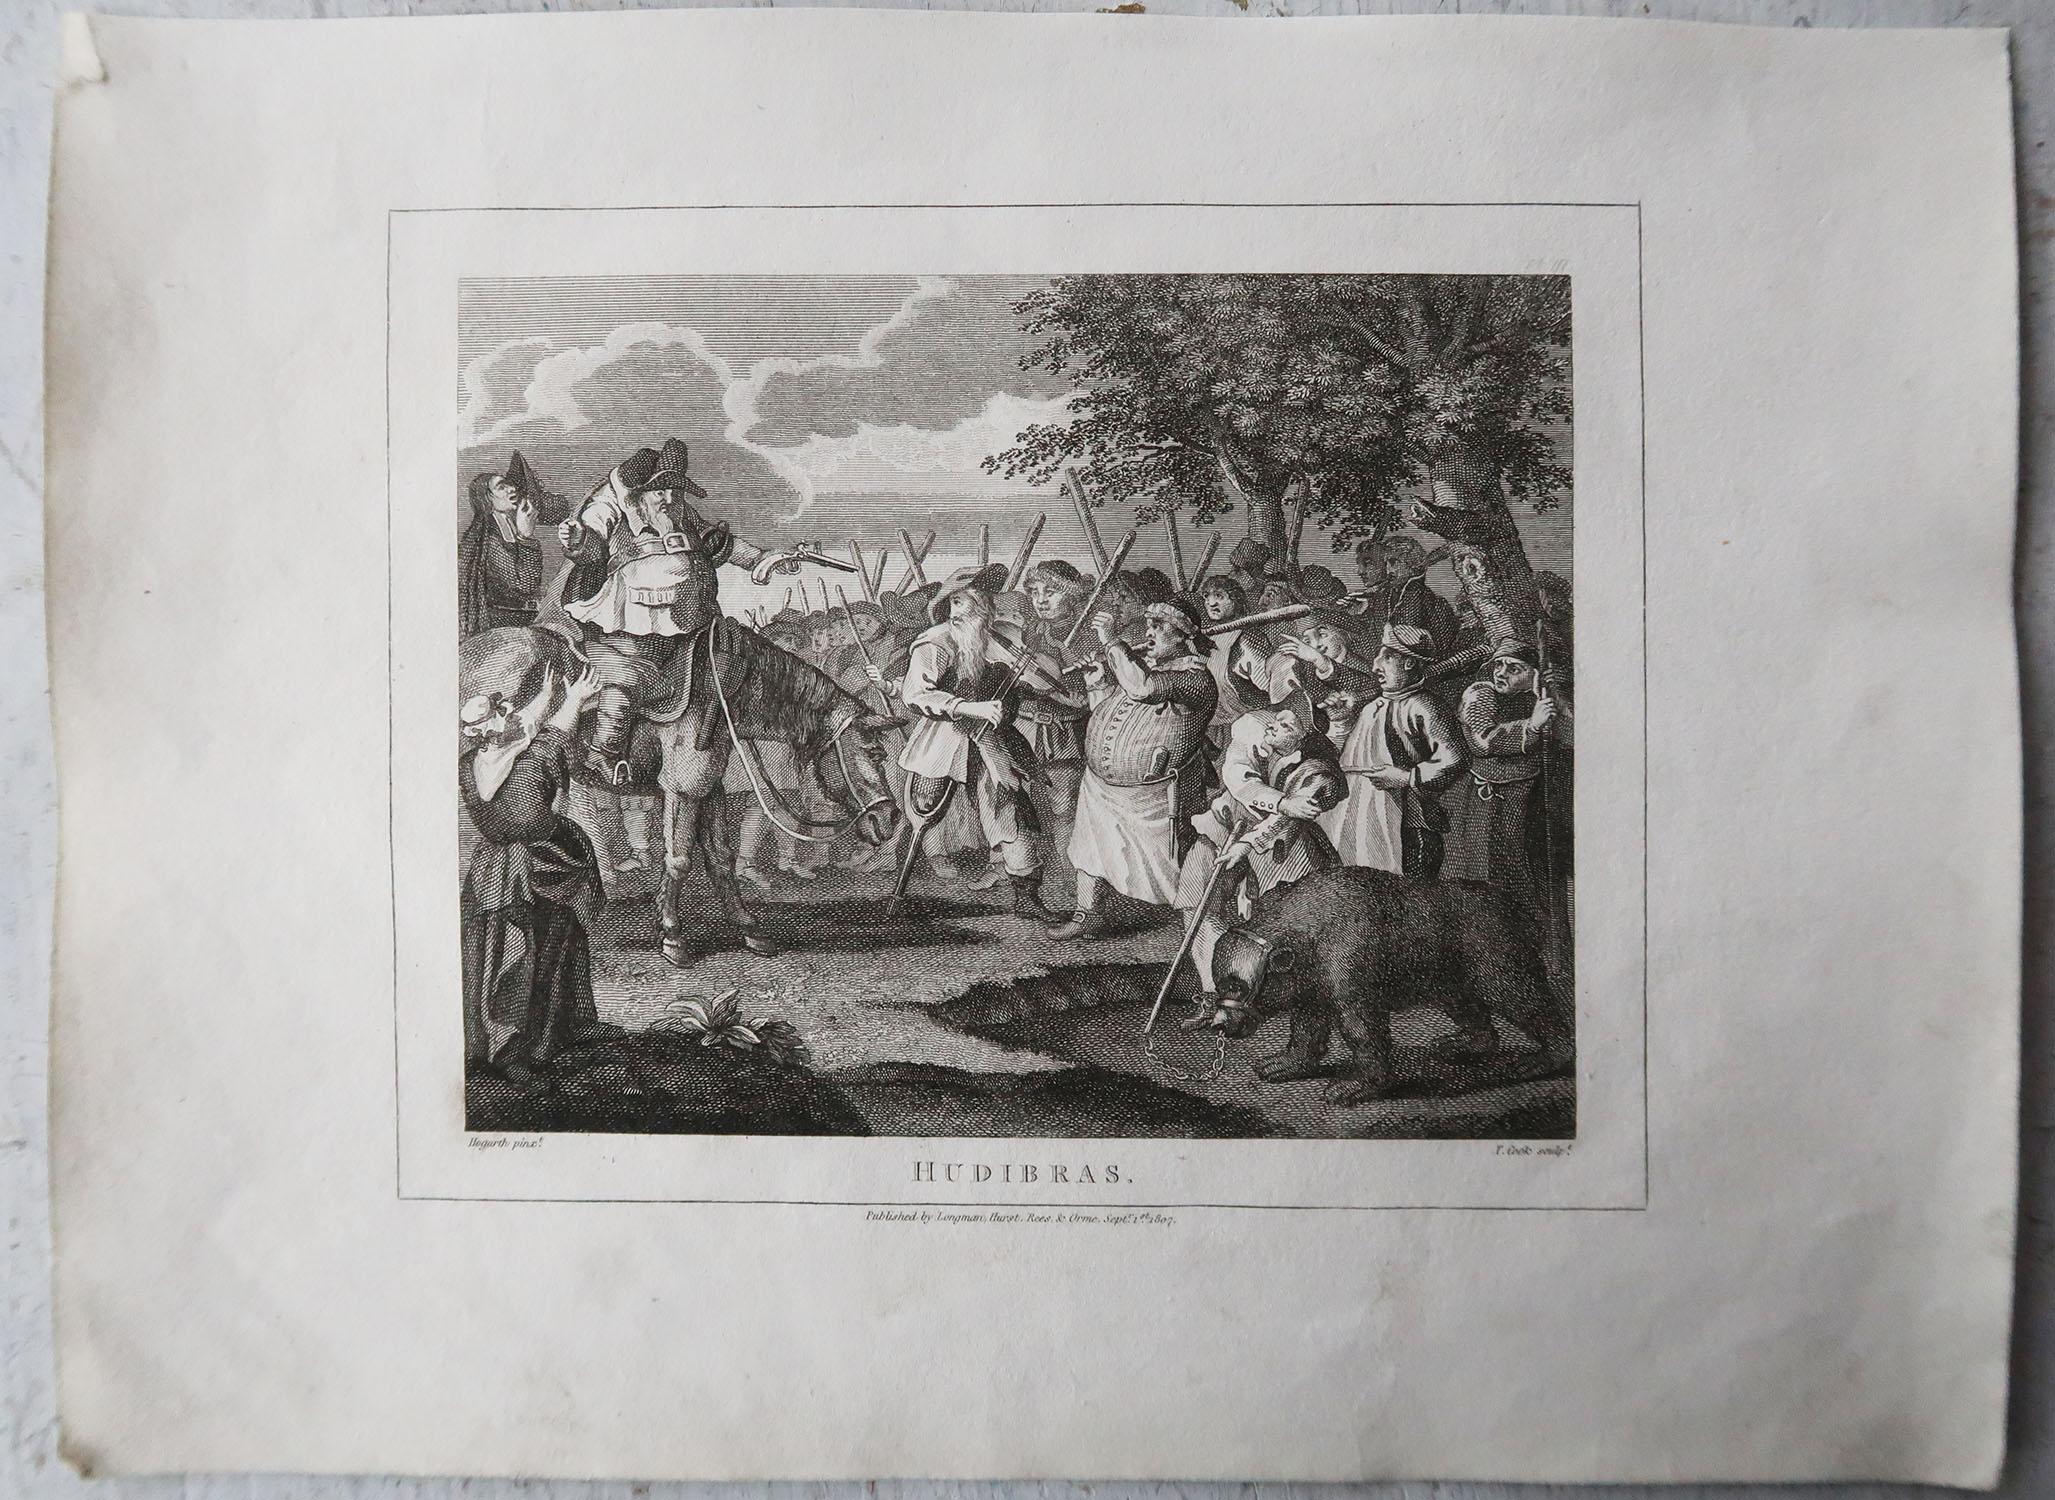 Set of 10 Original Antique Prints After William Hogarth, 